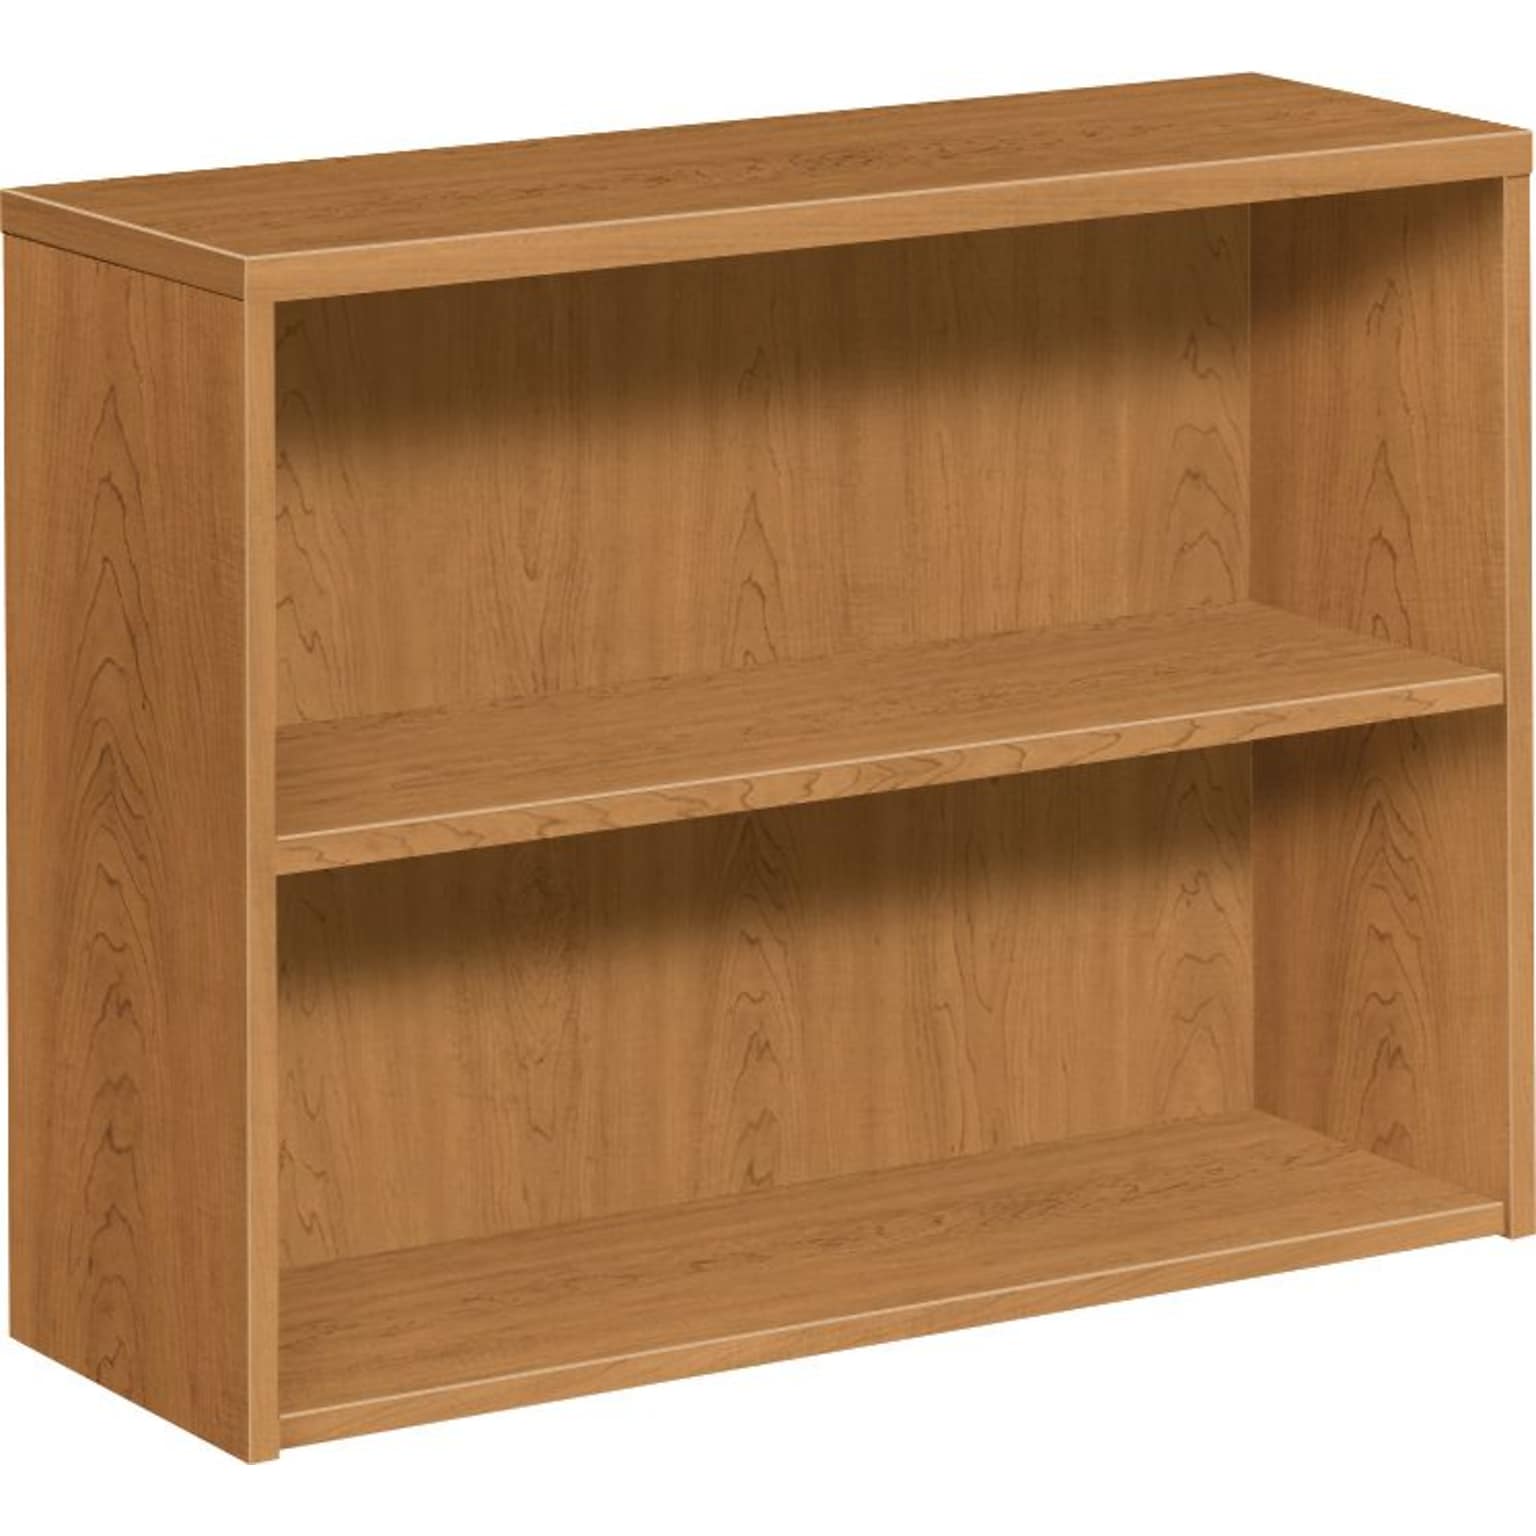 HON 10500 Series 2-Shelf Bookcase, 29 5/8H x 36W x 13 1/8D, Harvest (H105532CC)